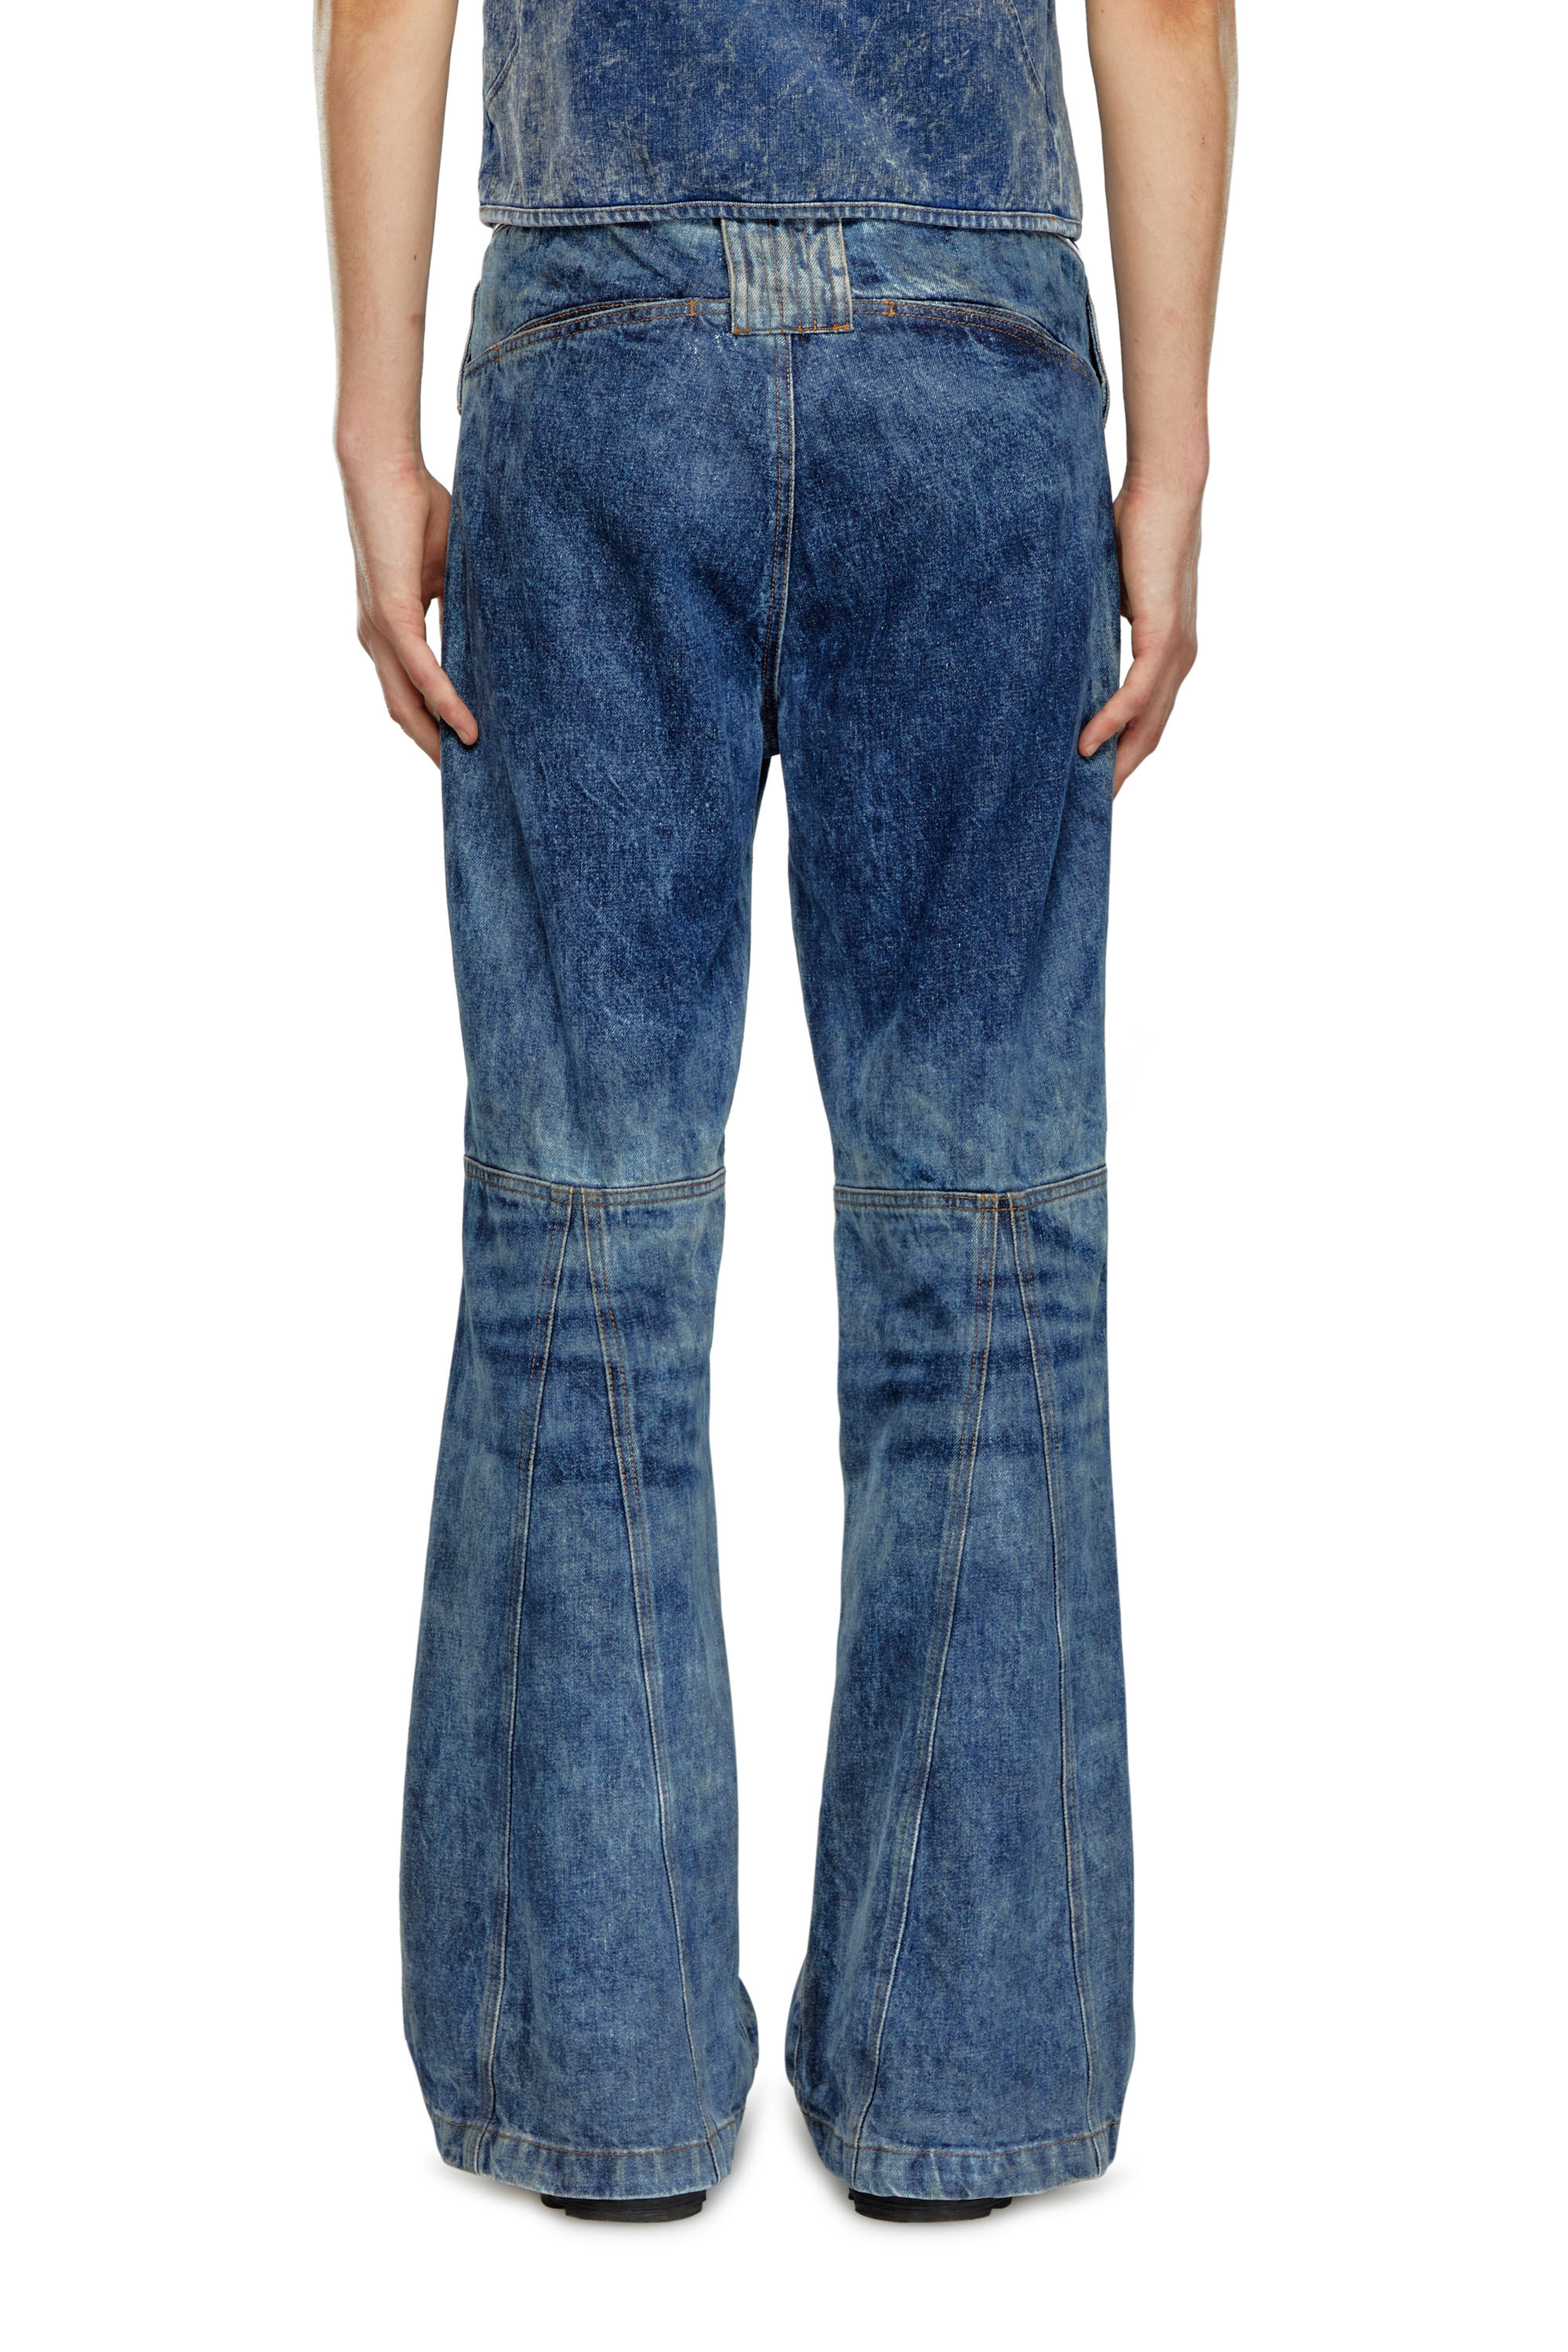 Diesel - Straight Jeans D-Gen 0PGAX, Hombre Straight Jeans - D-Gen in Azul marino - Image 3